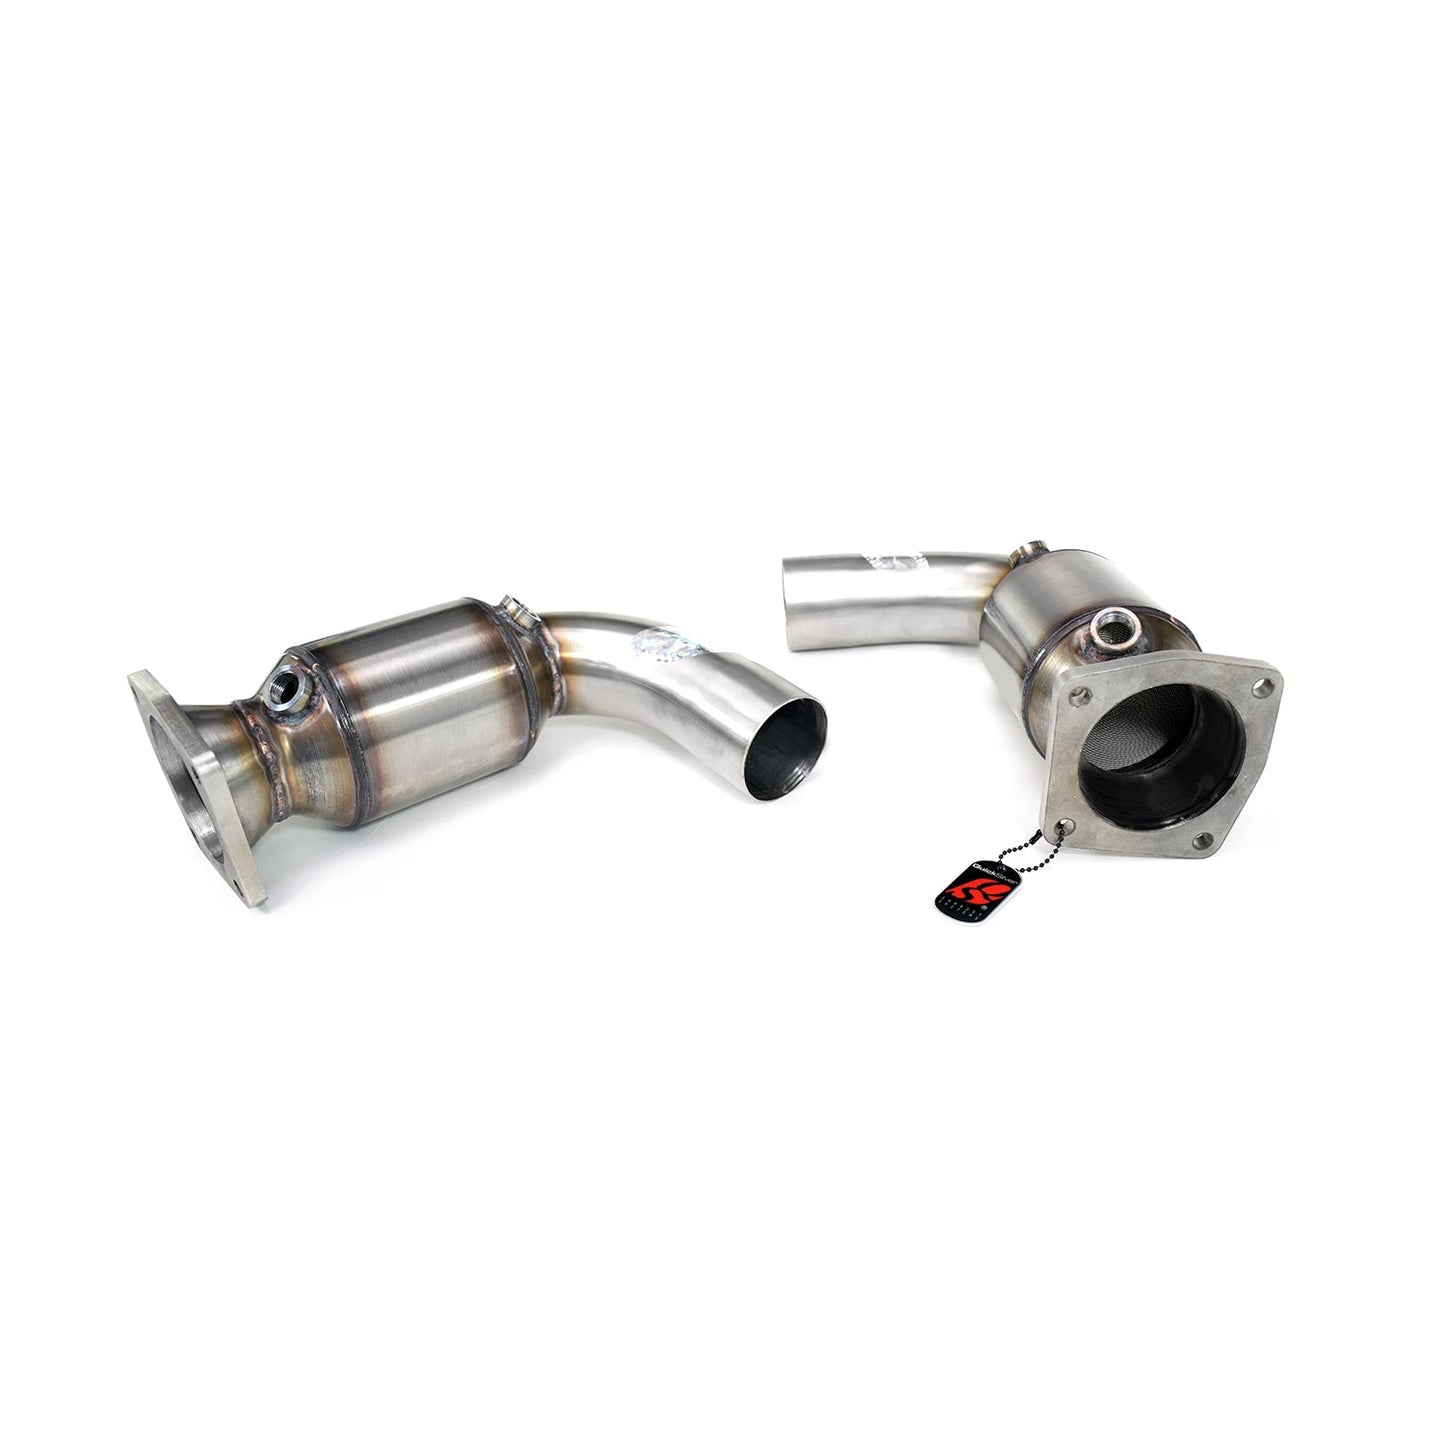 Porsche 911 Turbo (991 Gen 1 and Gen 2) Race Catalysts OR Catalyst Replacement Pipes (2011-19) - QuickSilver Exhausts